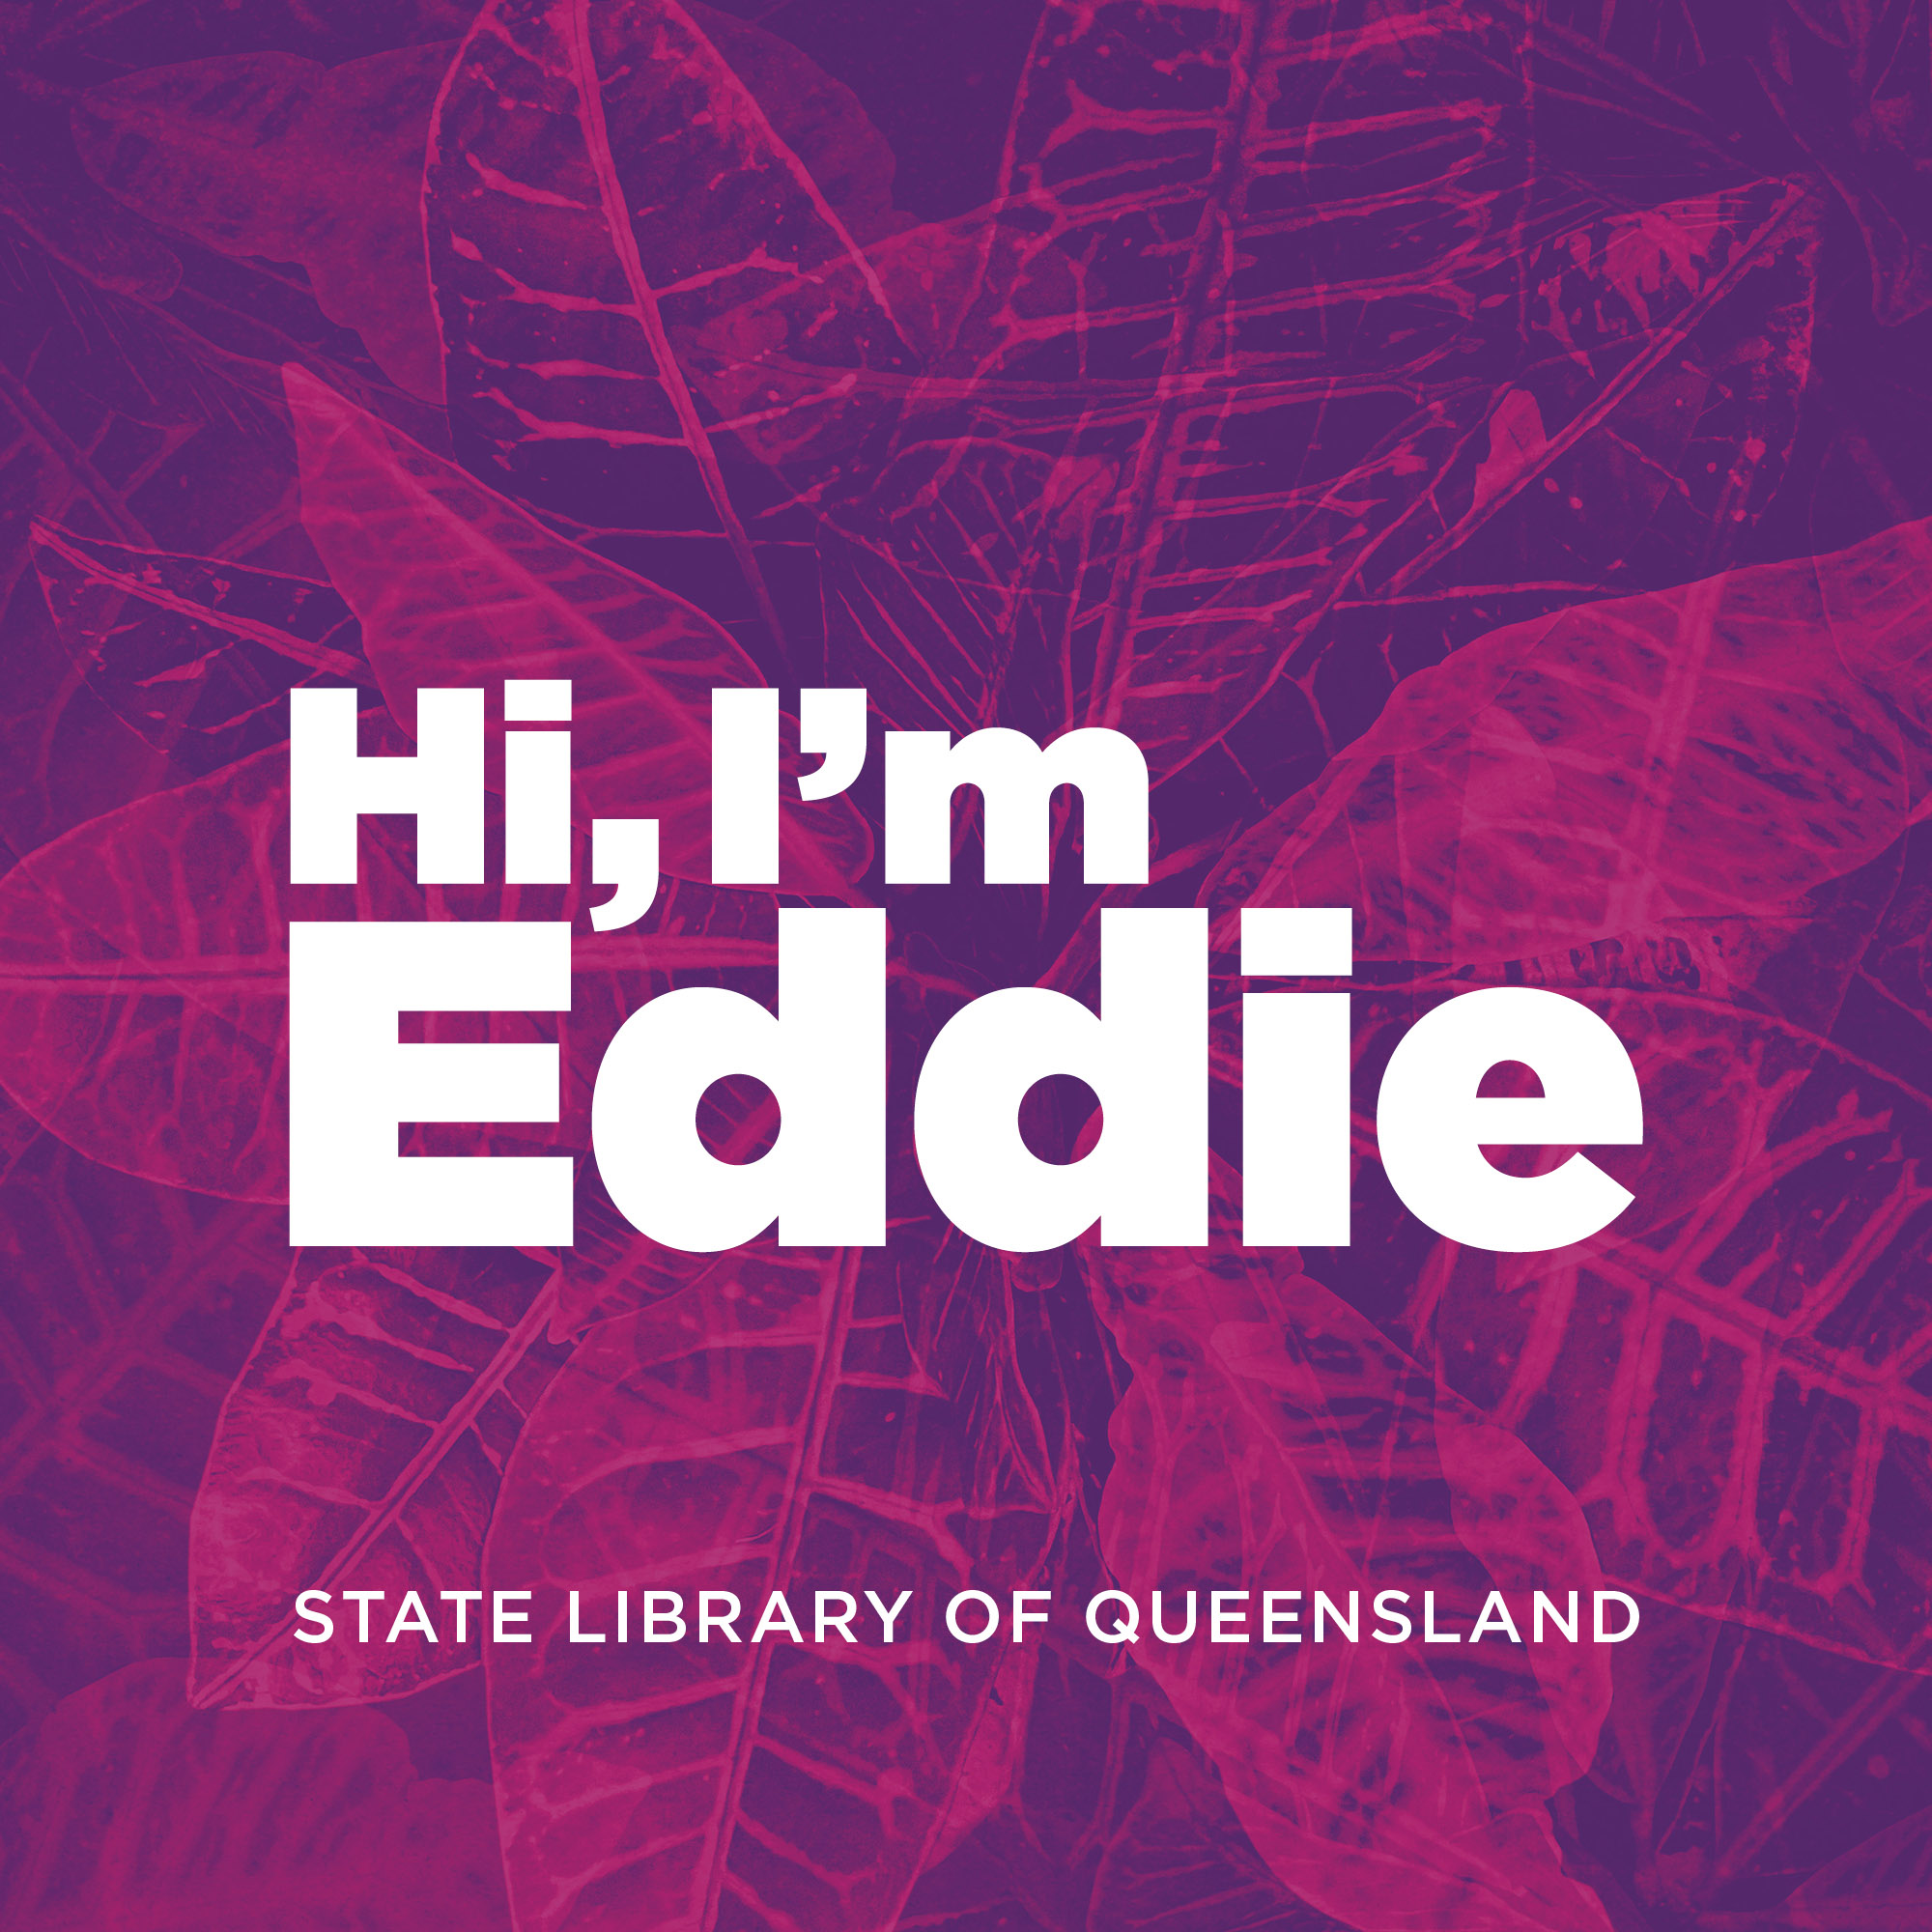 Hi, I'm Eddie pink with SL logo